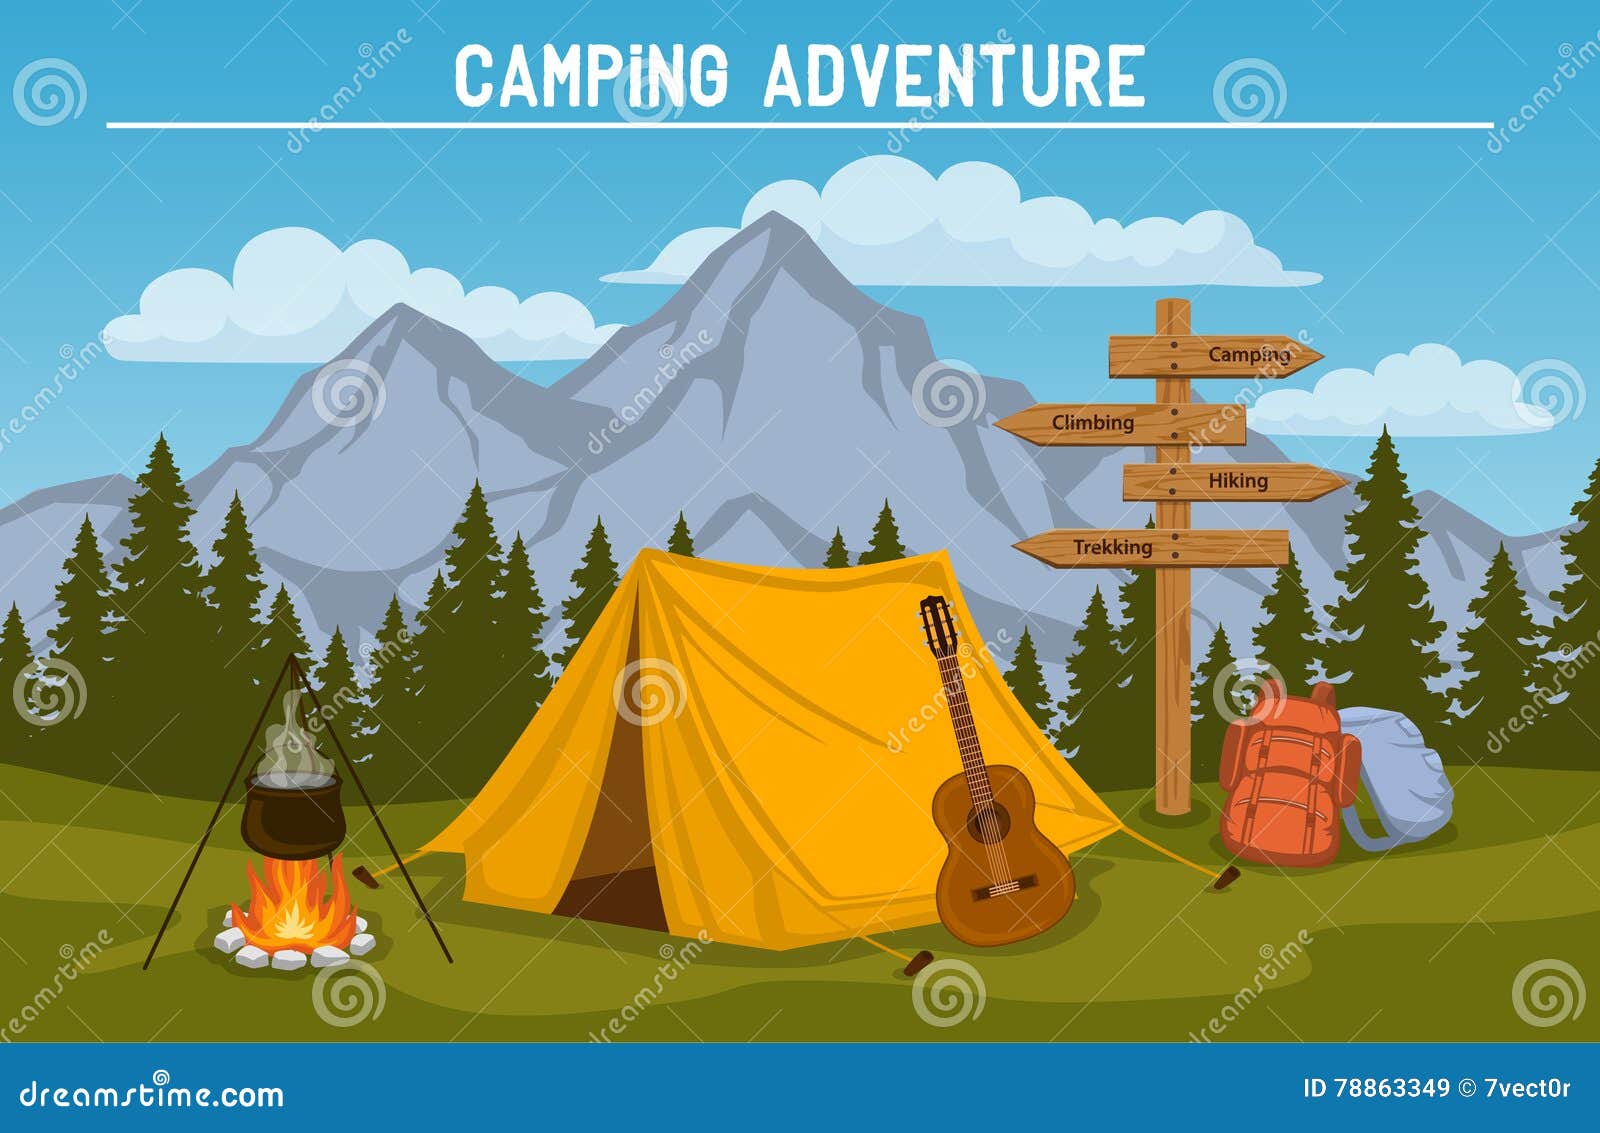 Campsite Cartoon